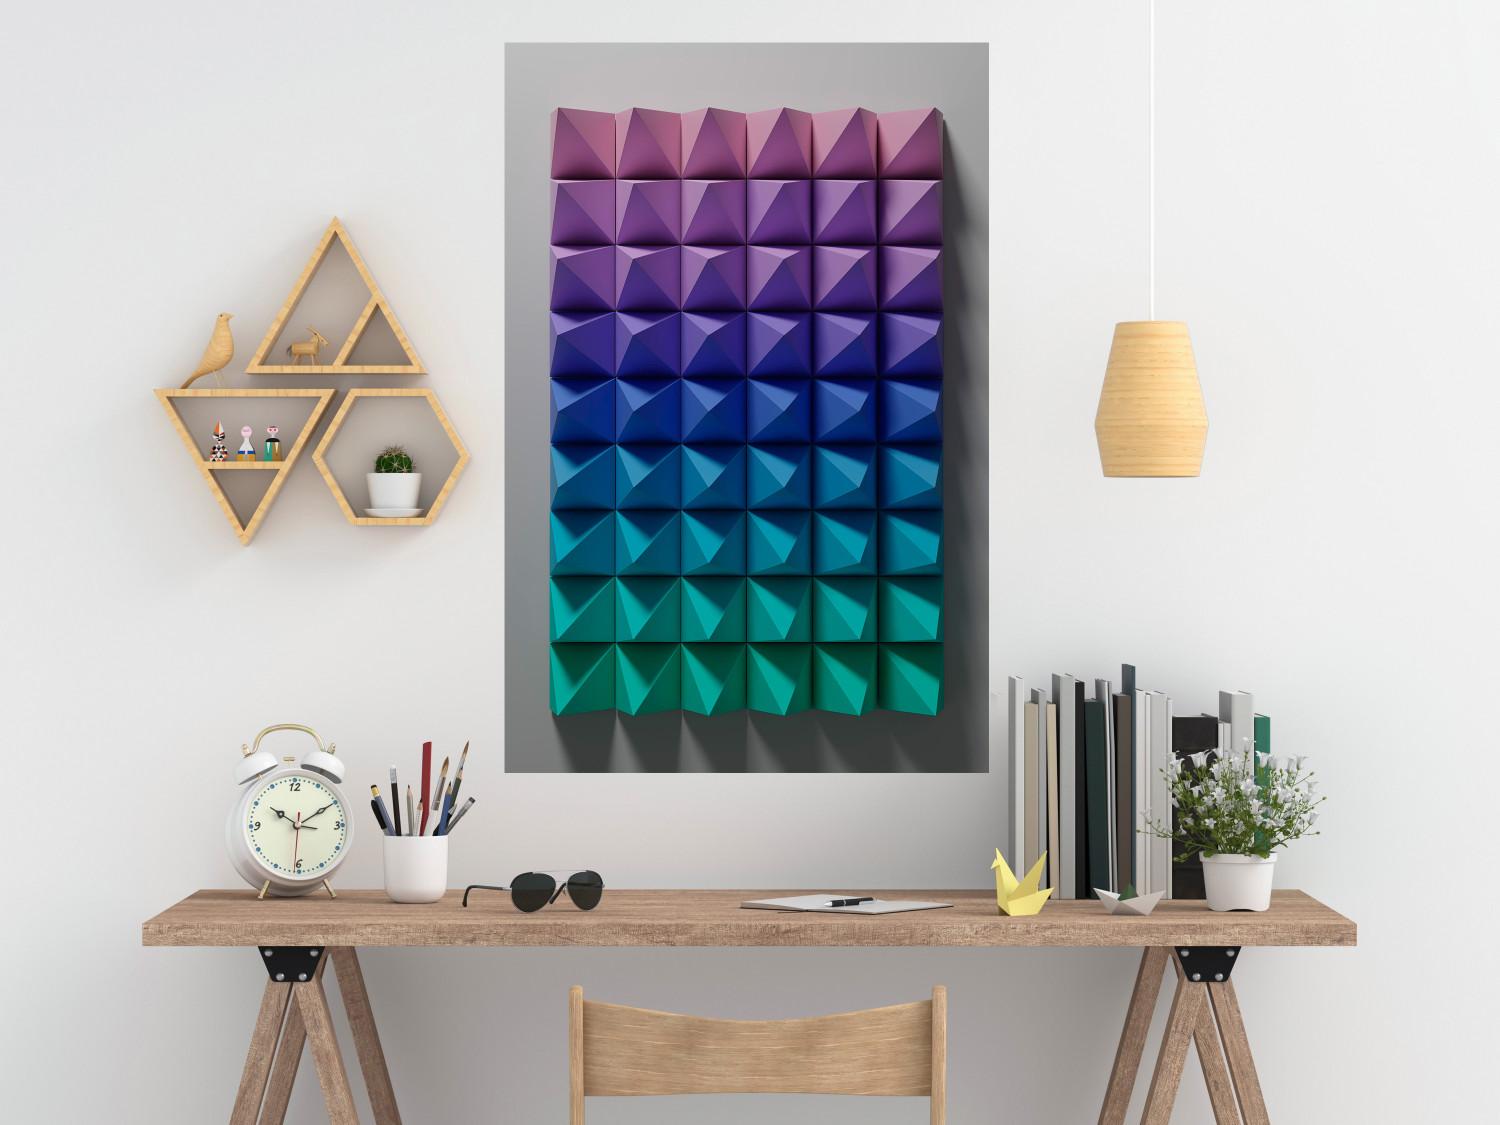 Poster Stillness - multicolored composition of a 3D-like geometric figure